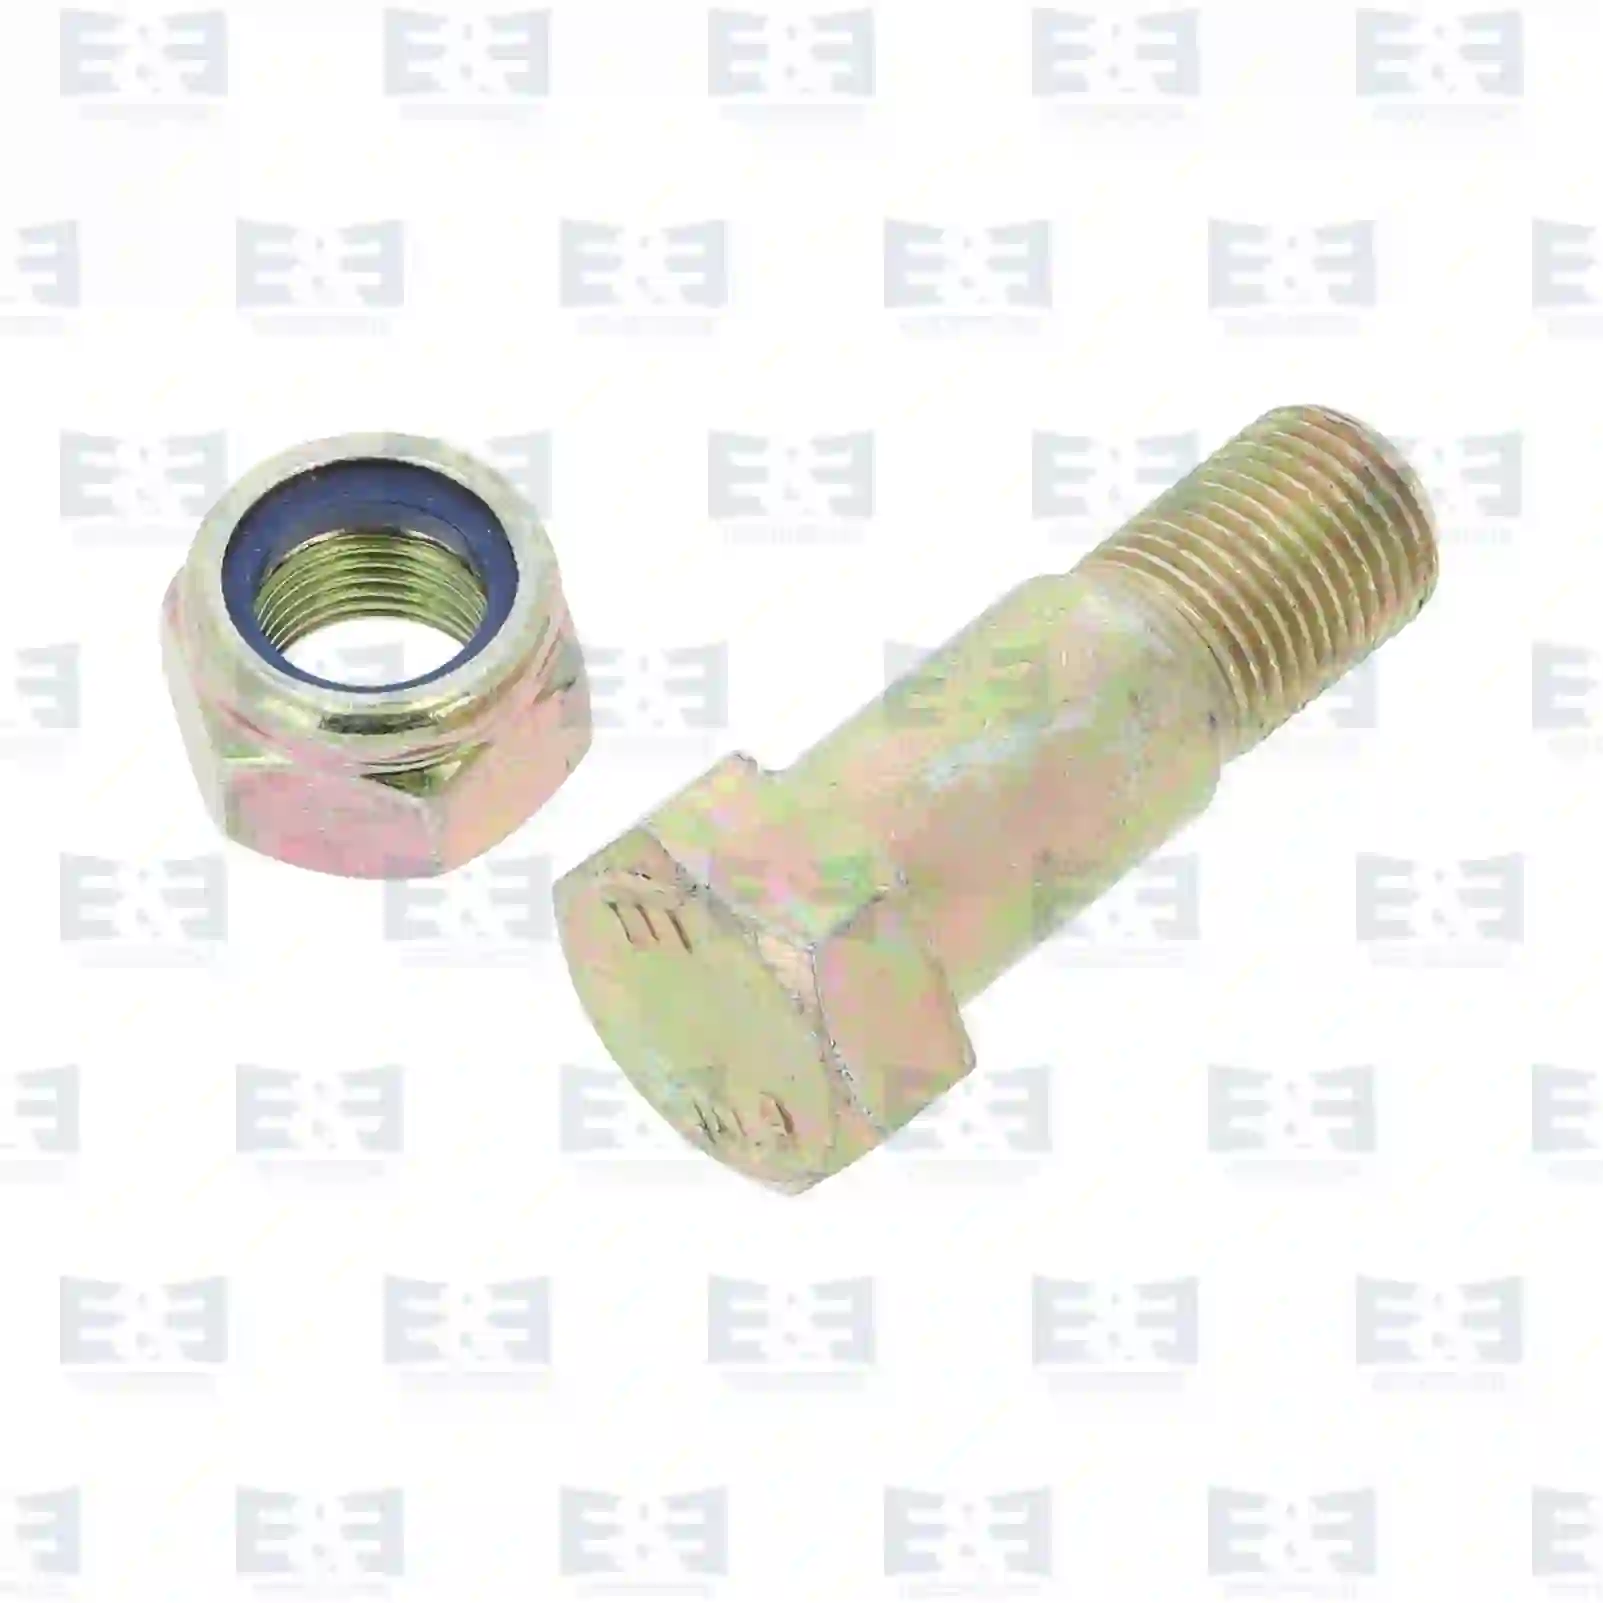  Bolt with nut || E&E Truck Spare Parts | Truck Spare Parts, Auotomotive Spare Parts